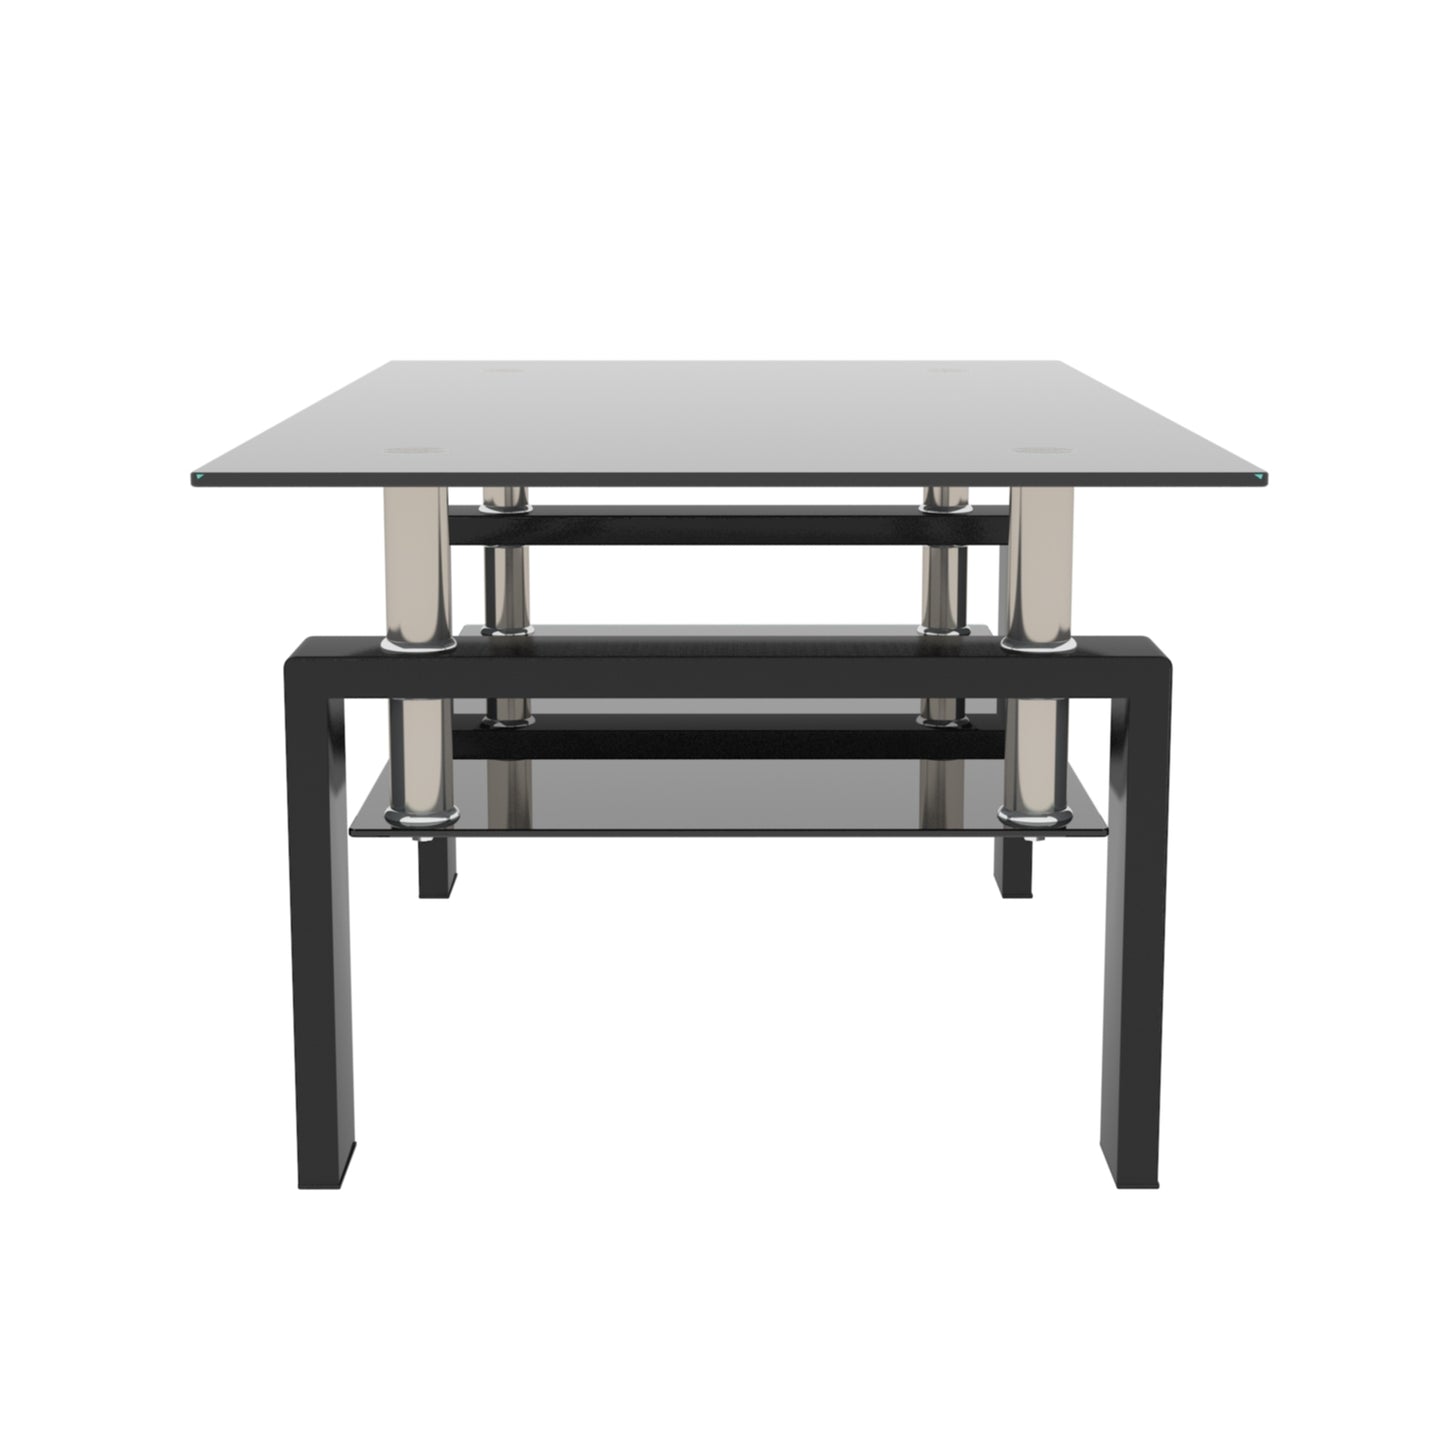 Sleek Rectangular Black Glass Coffee Table with Storage Space